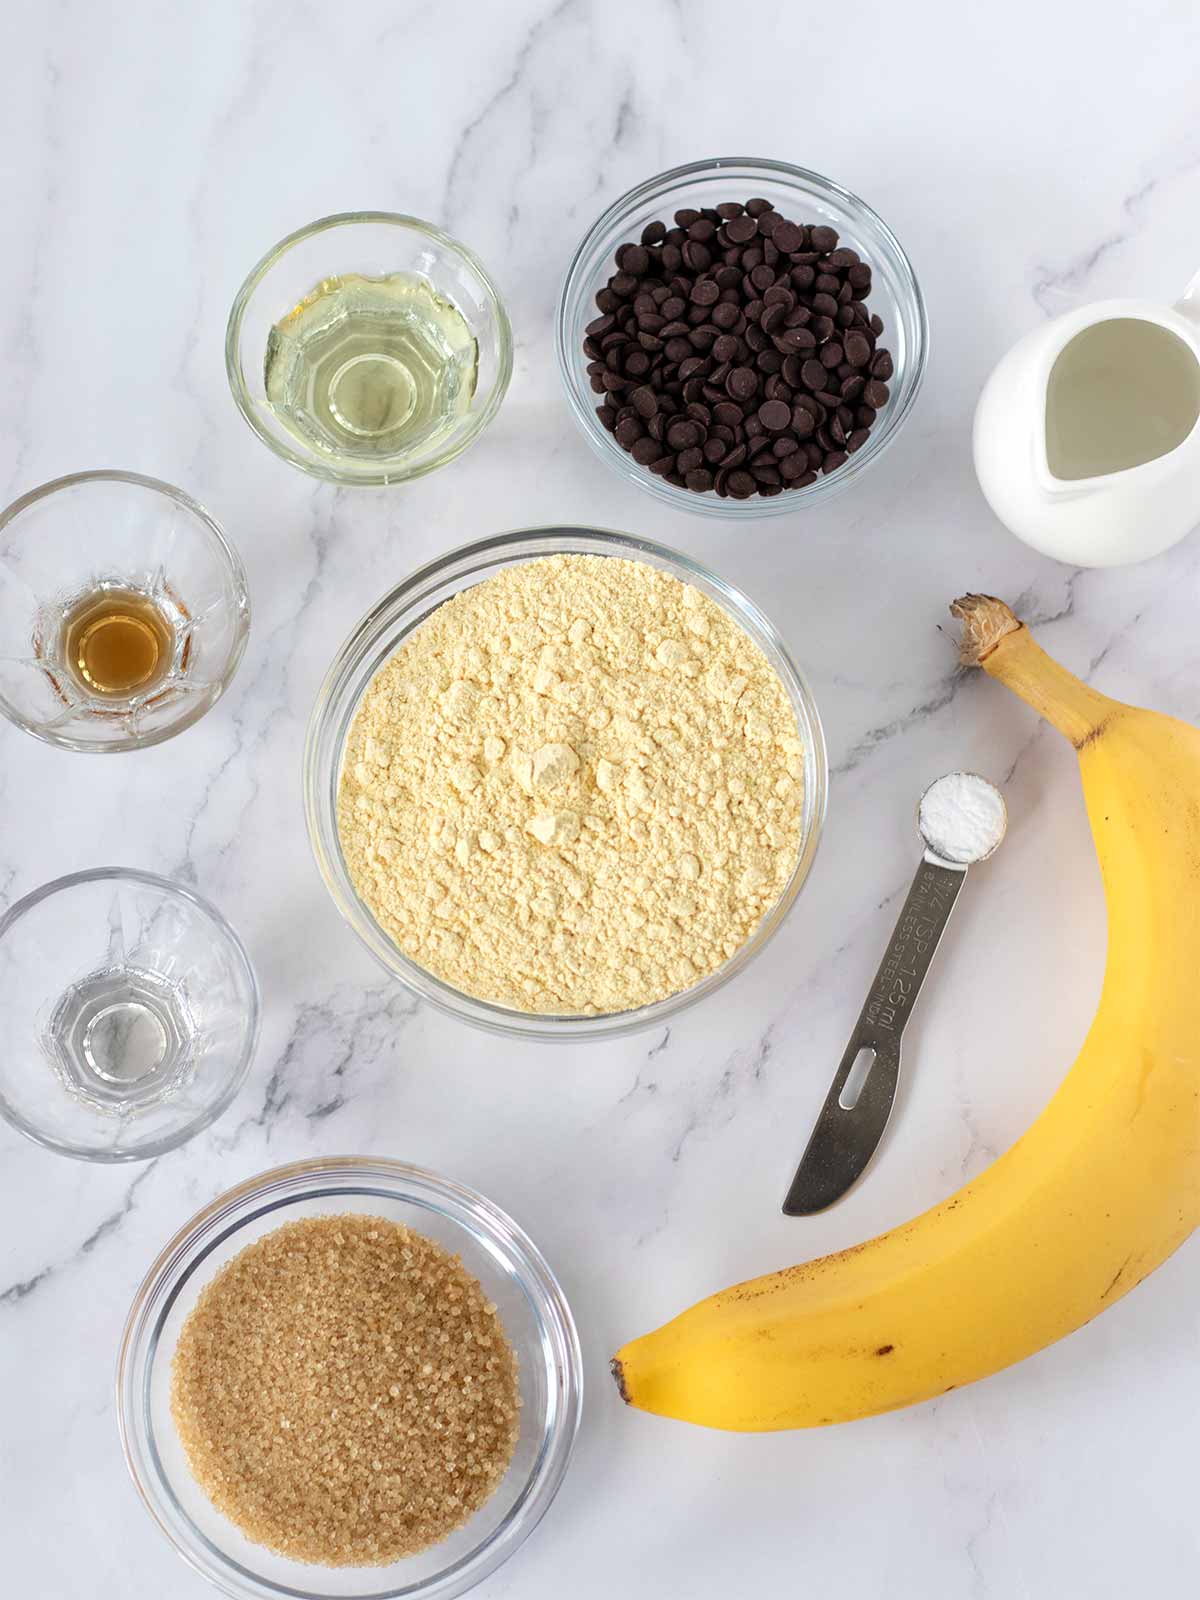 Plant-based ingredients for baking gluten-free chickpa flour dessert